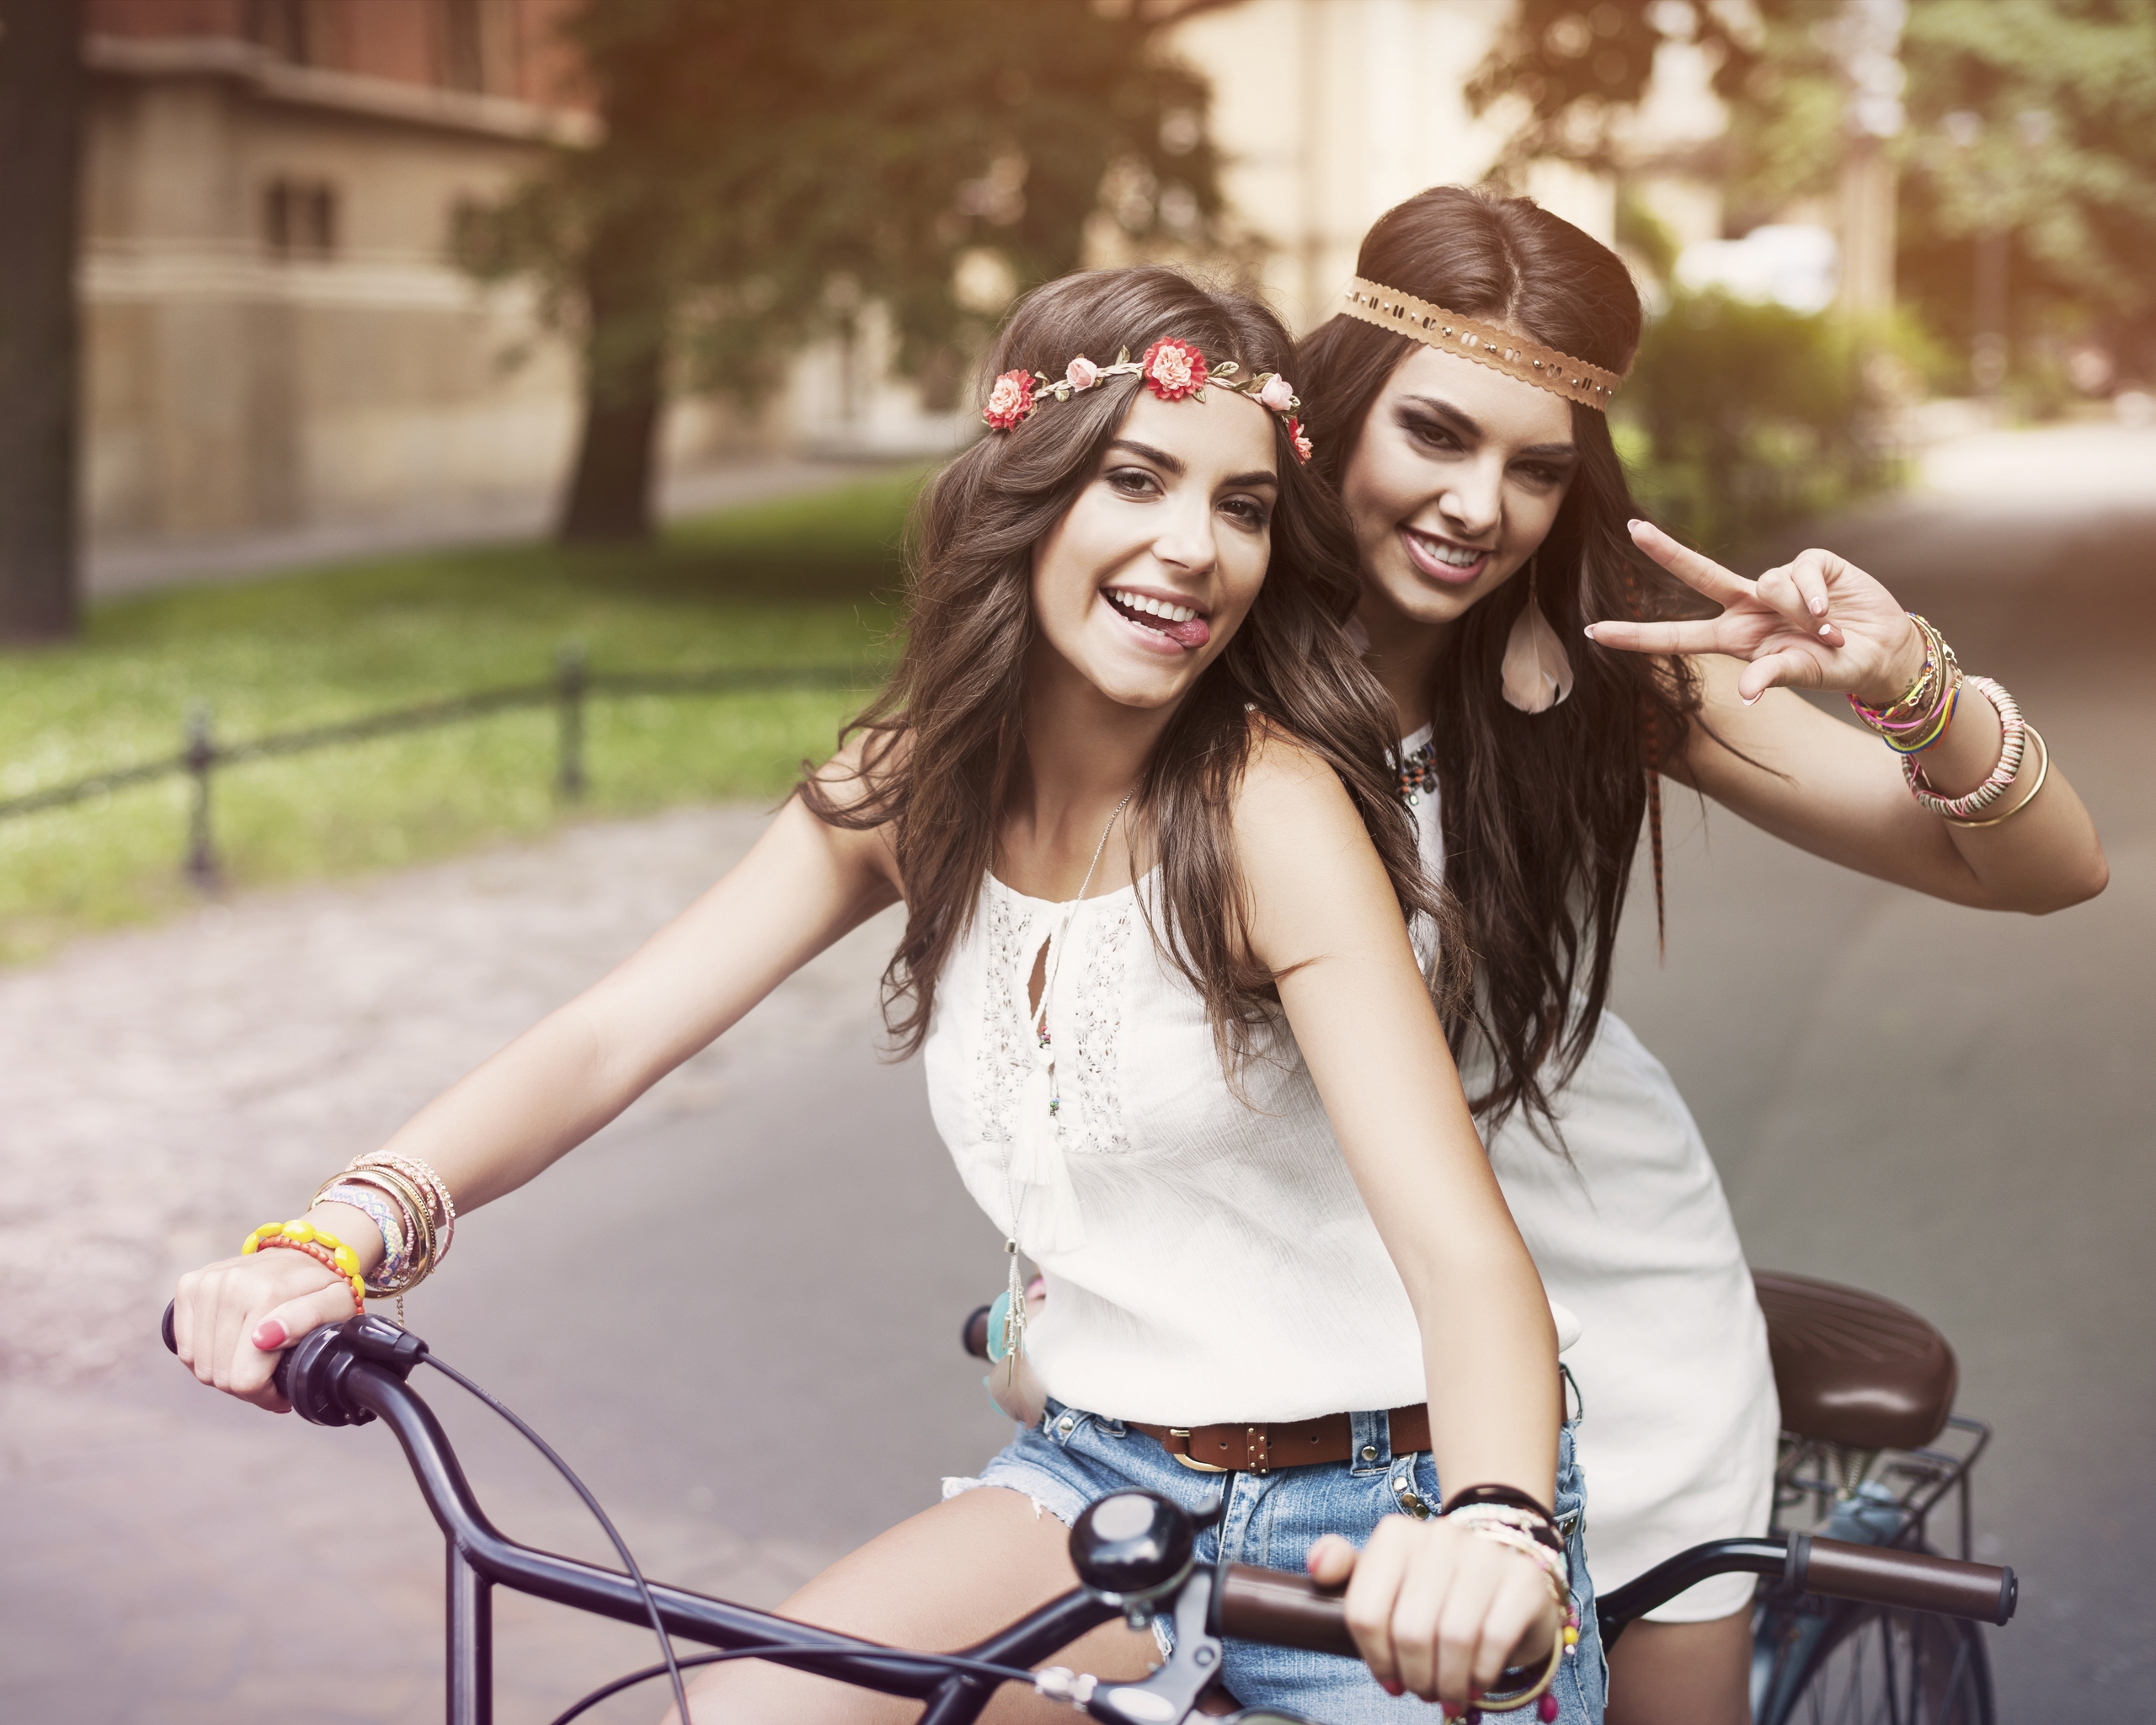 Image: Girl, bike, couple, two, ride, posing, goofing around